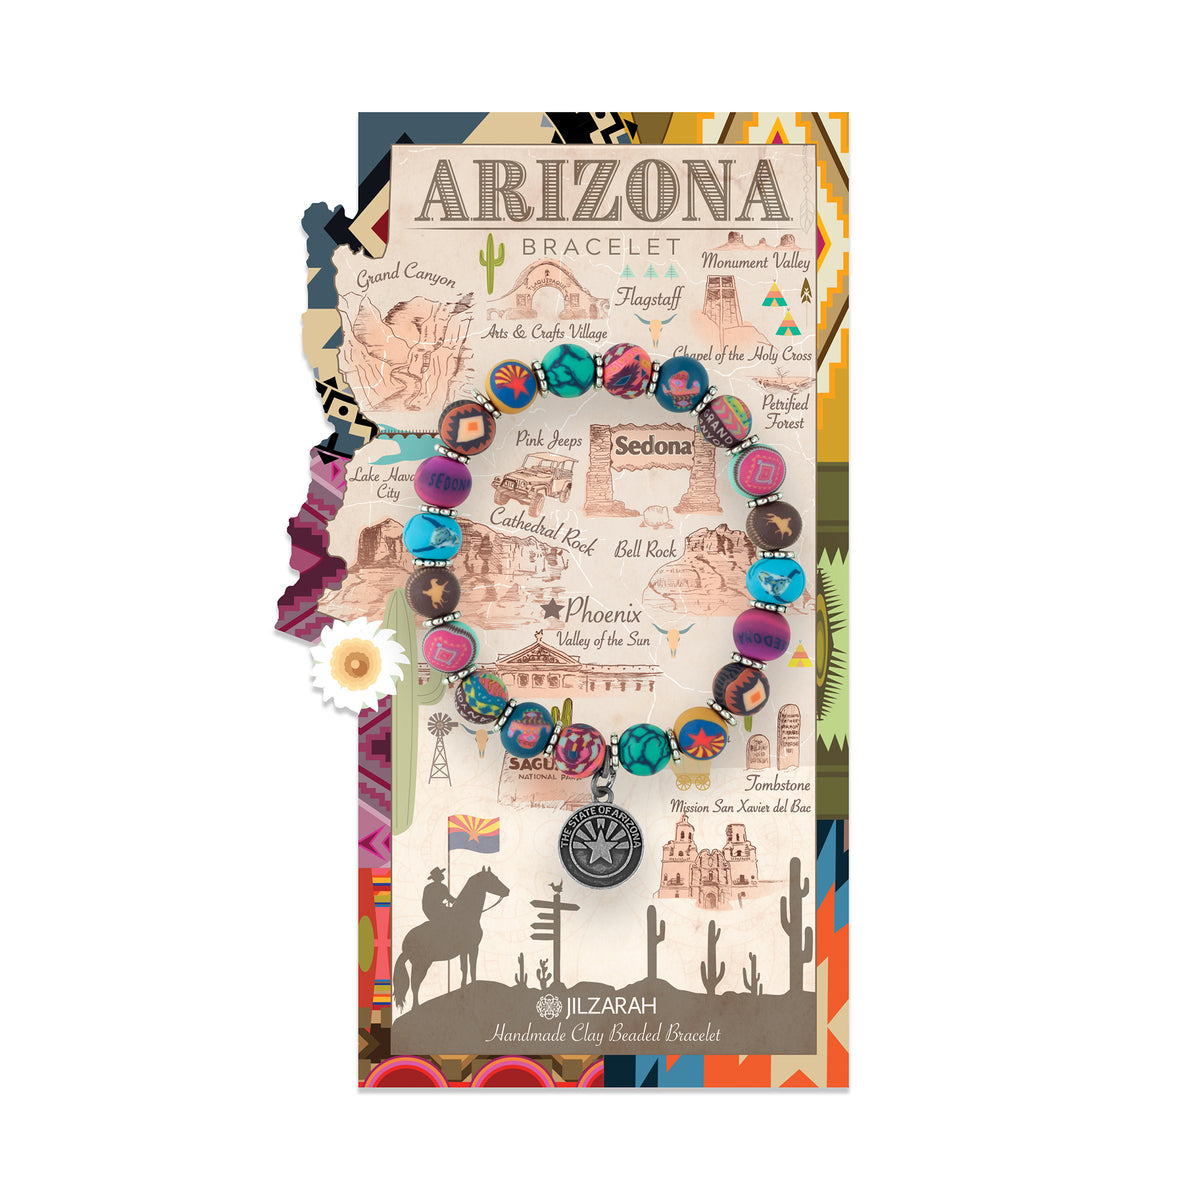 Arizona Places We Love Bracelet